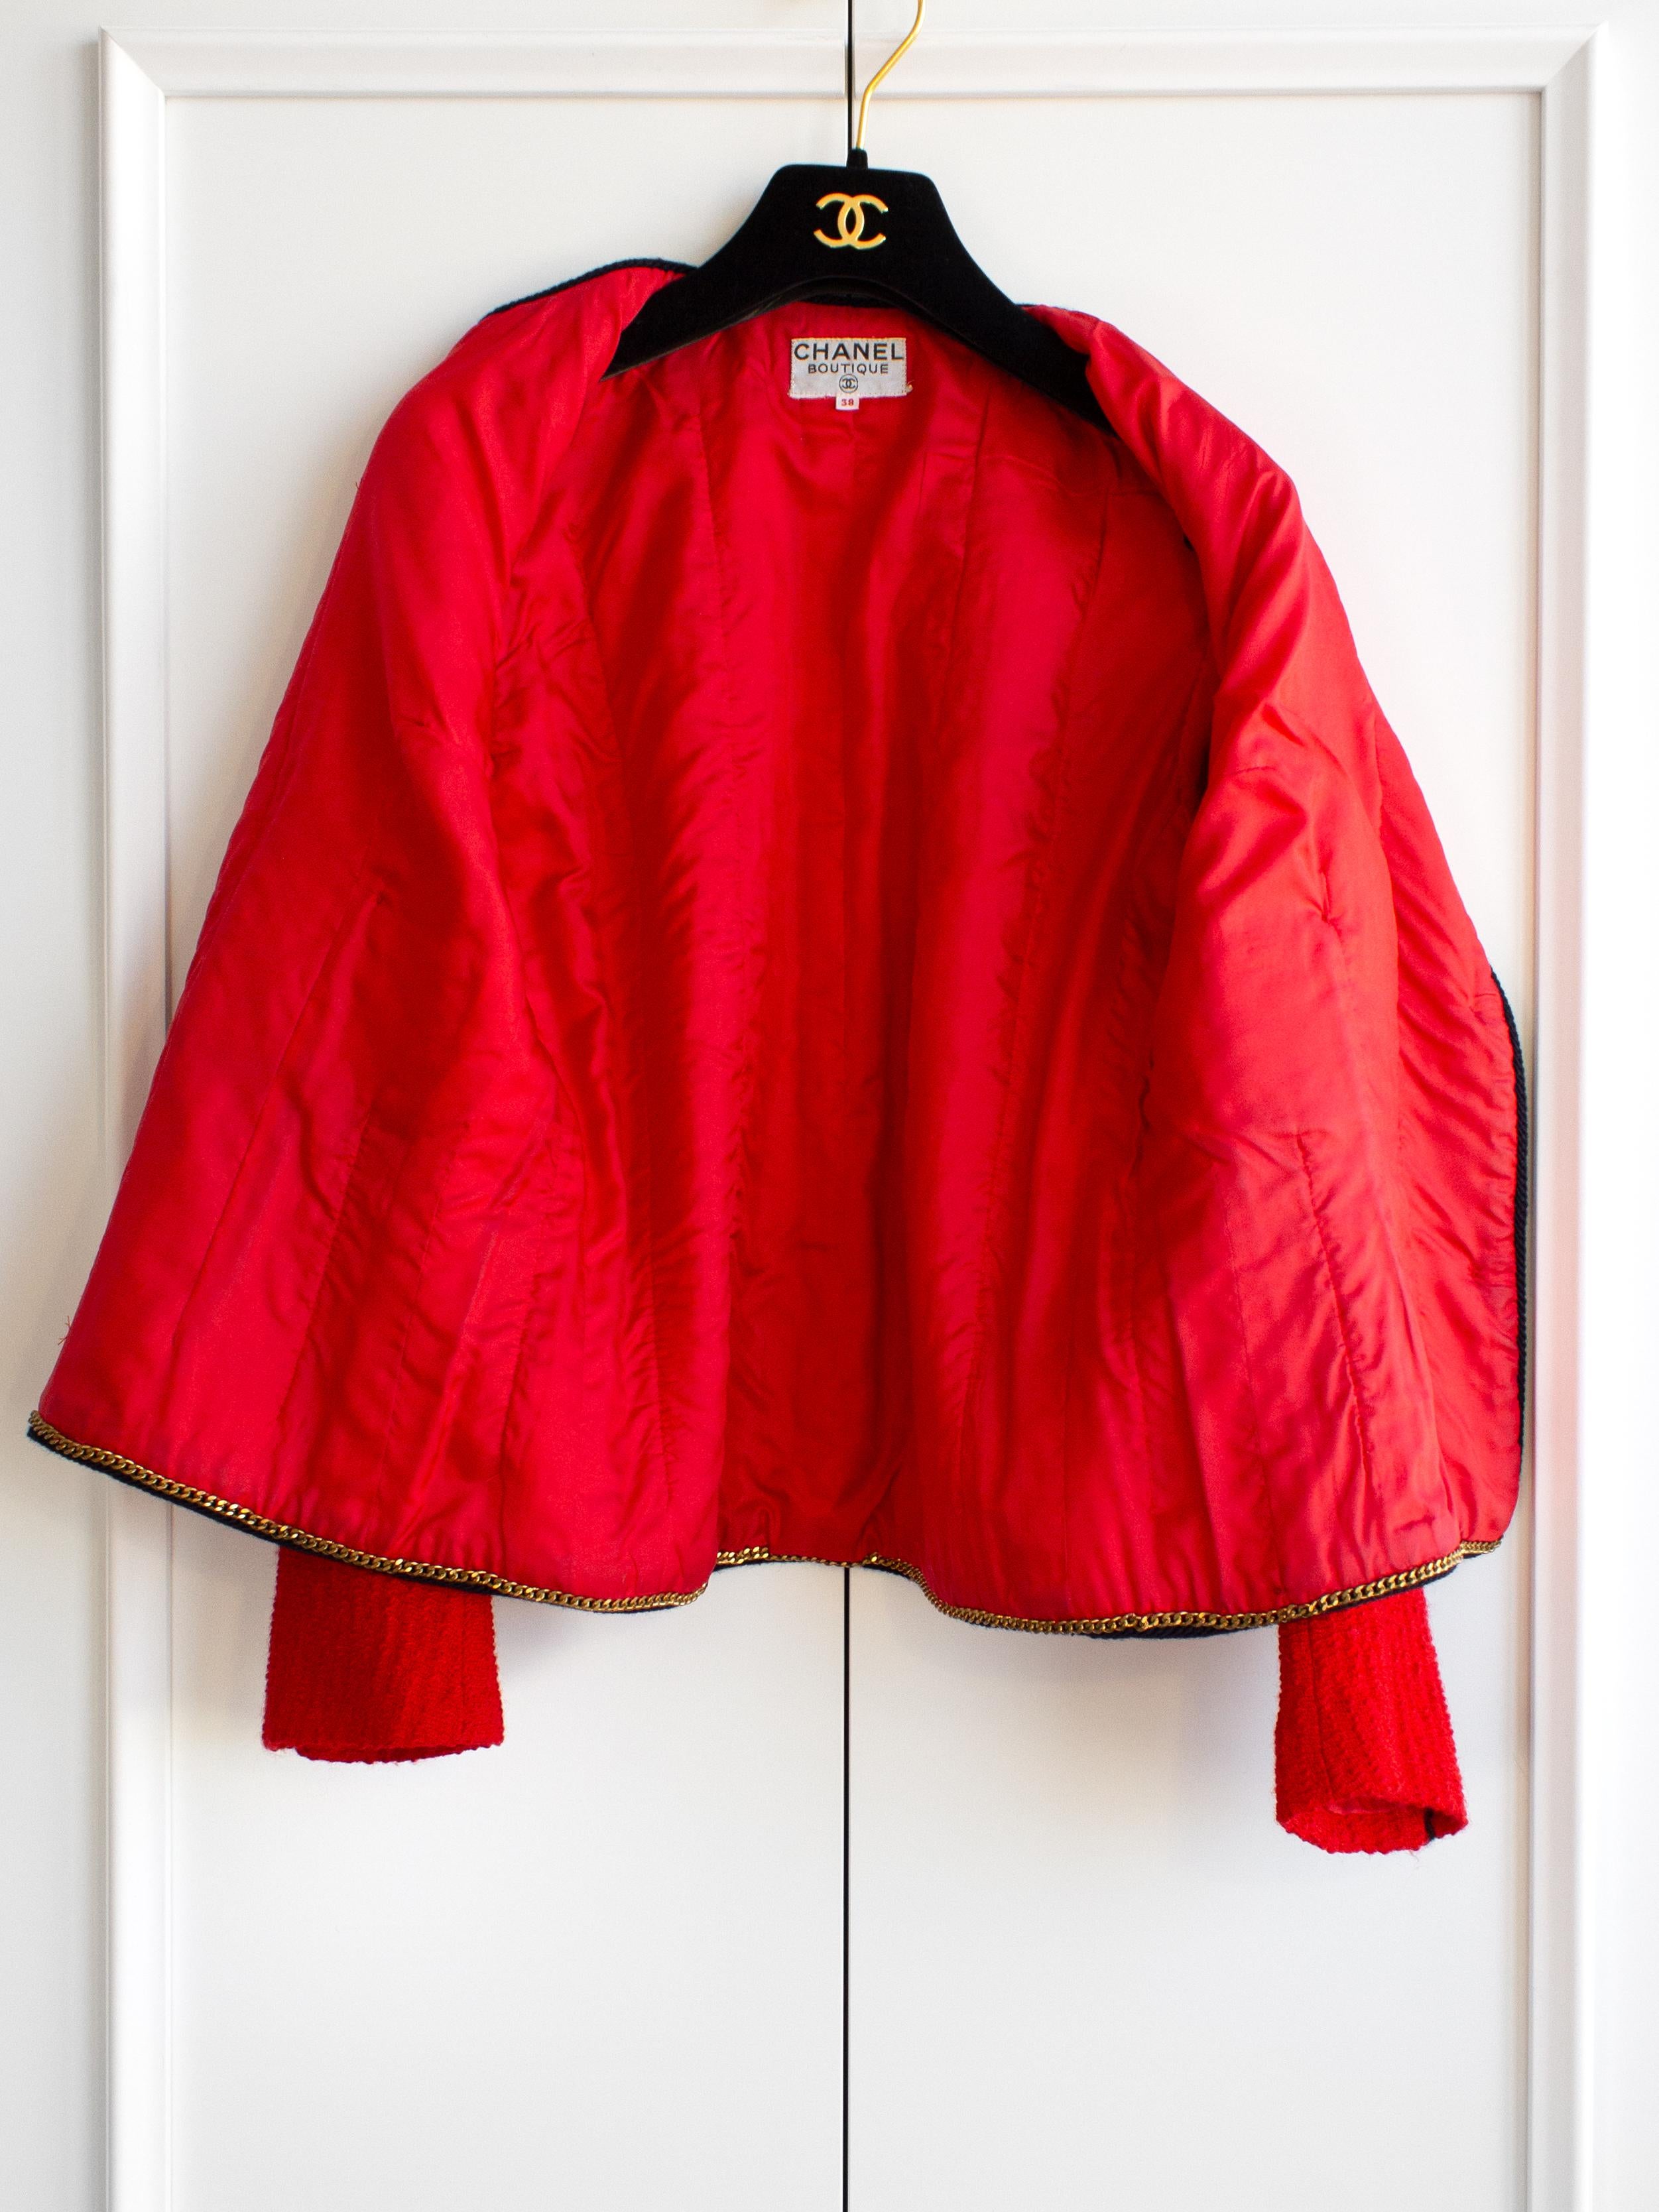 Chanel Vintage 1981 Parisian Red Gold Lion Tweed Jacket Skirt Suit For Sale 6